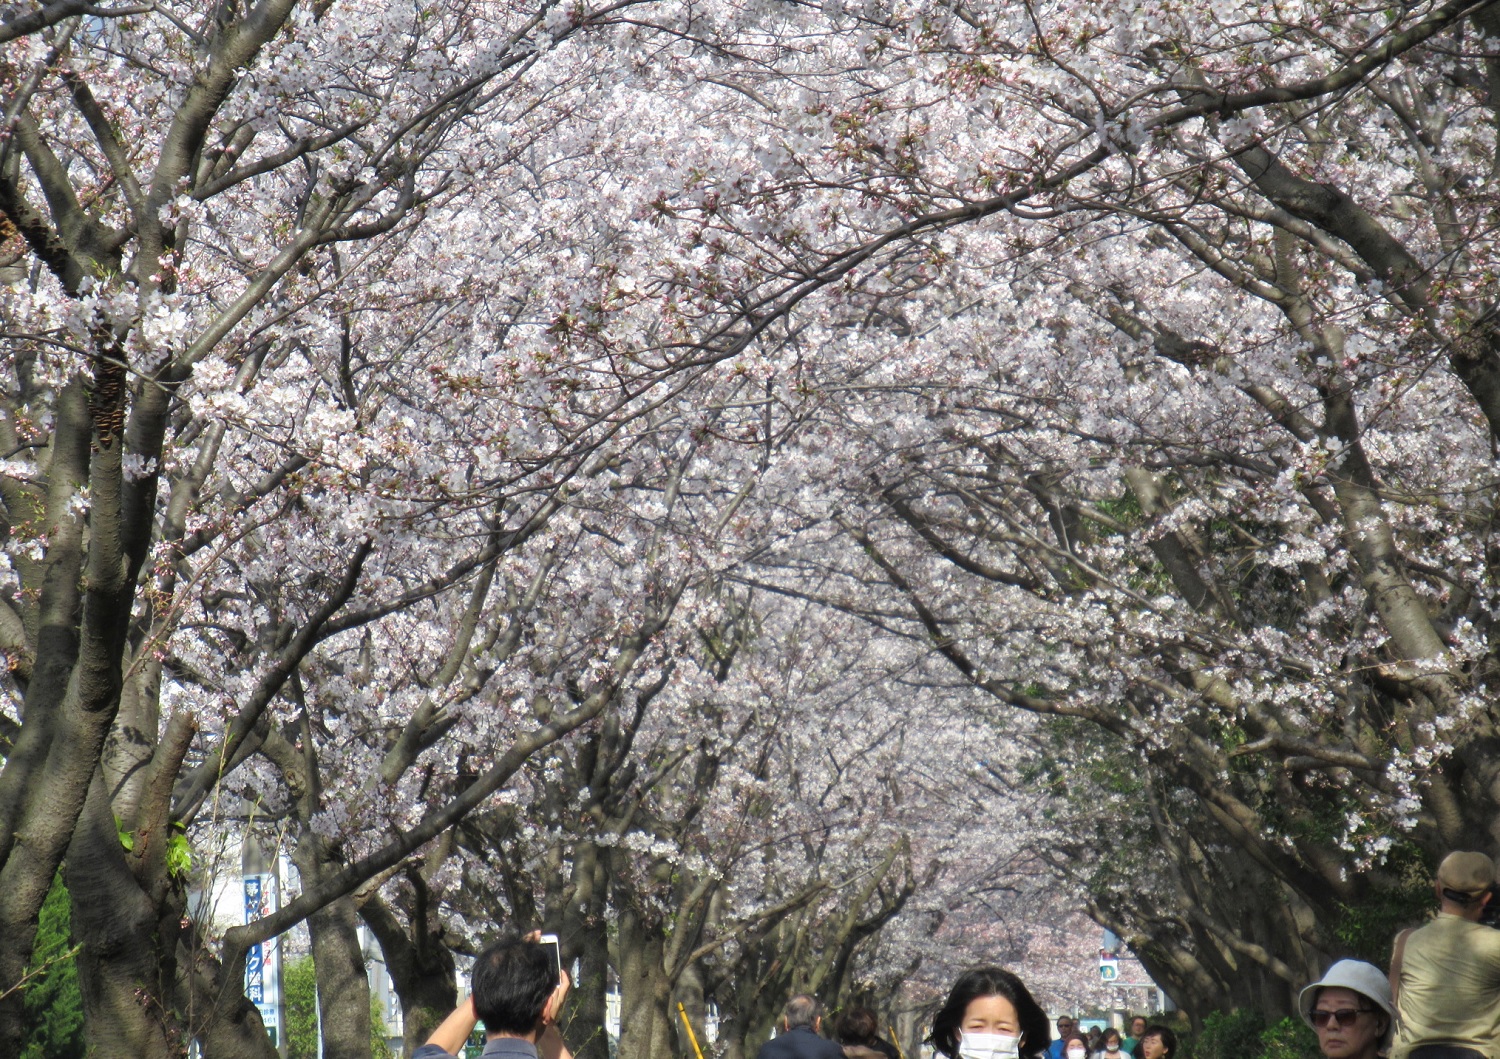 Cherry trees along Chuo Koen